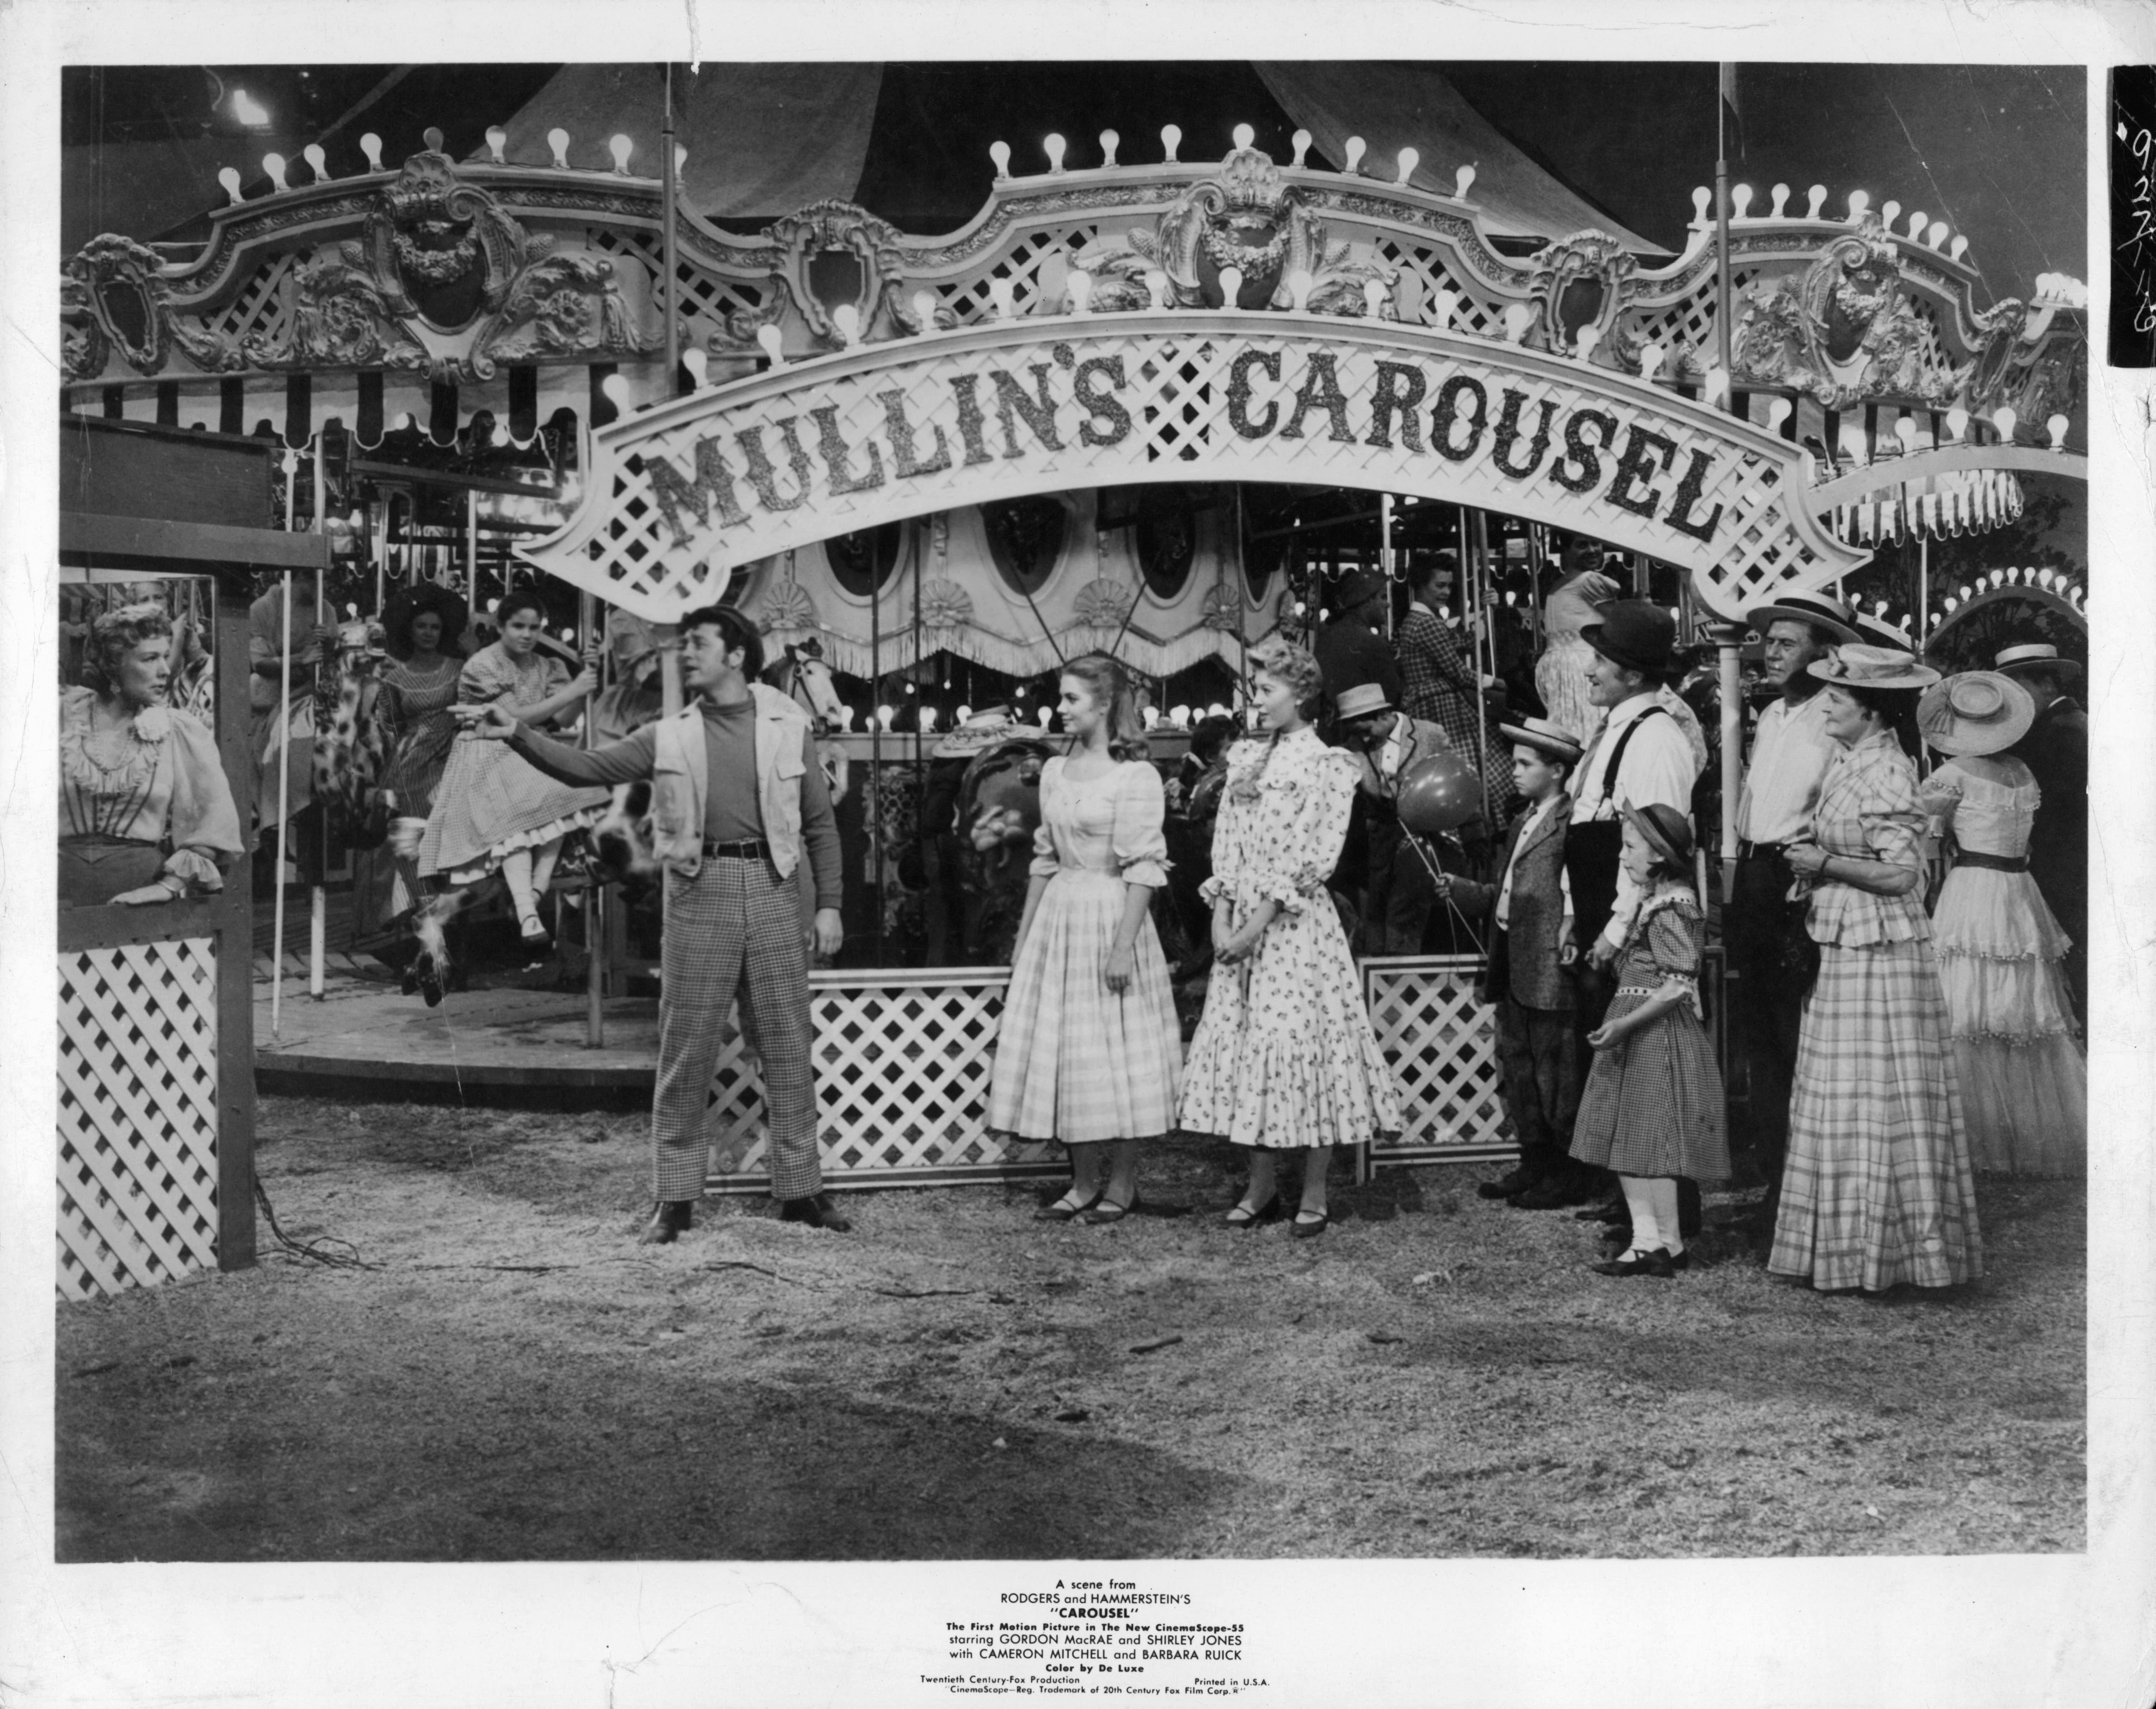 Still of Shirley Jones and Barbara Ruick in Carousel (1956)